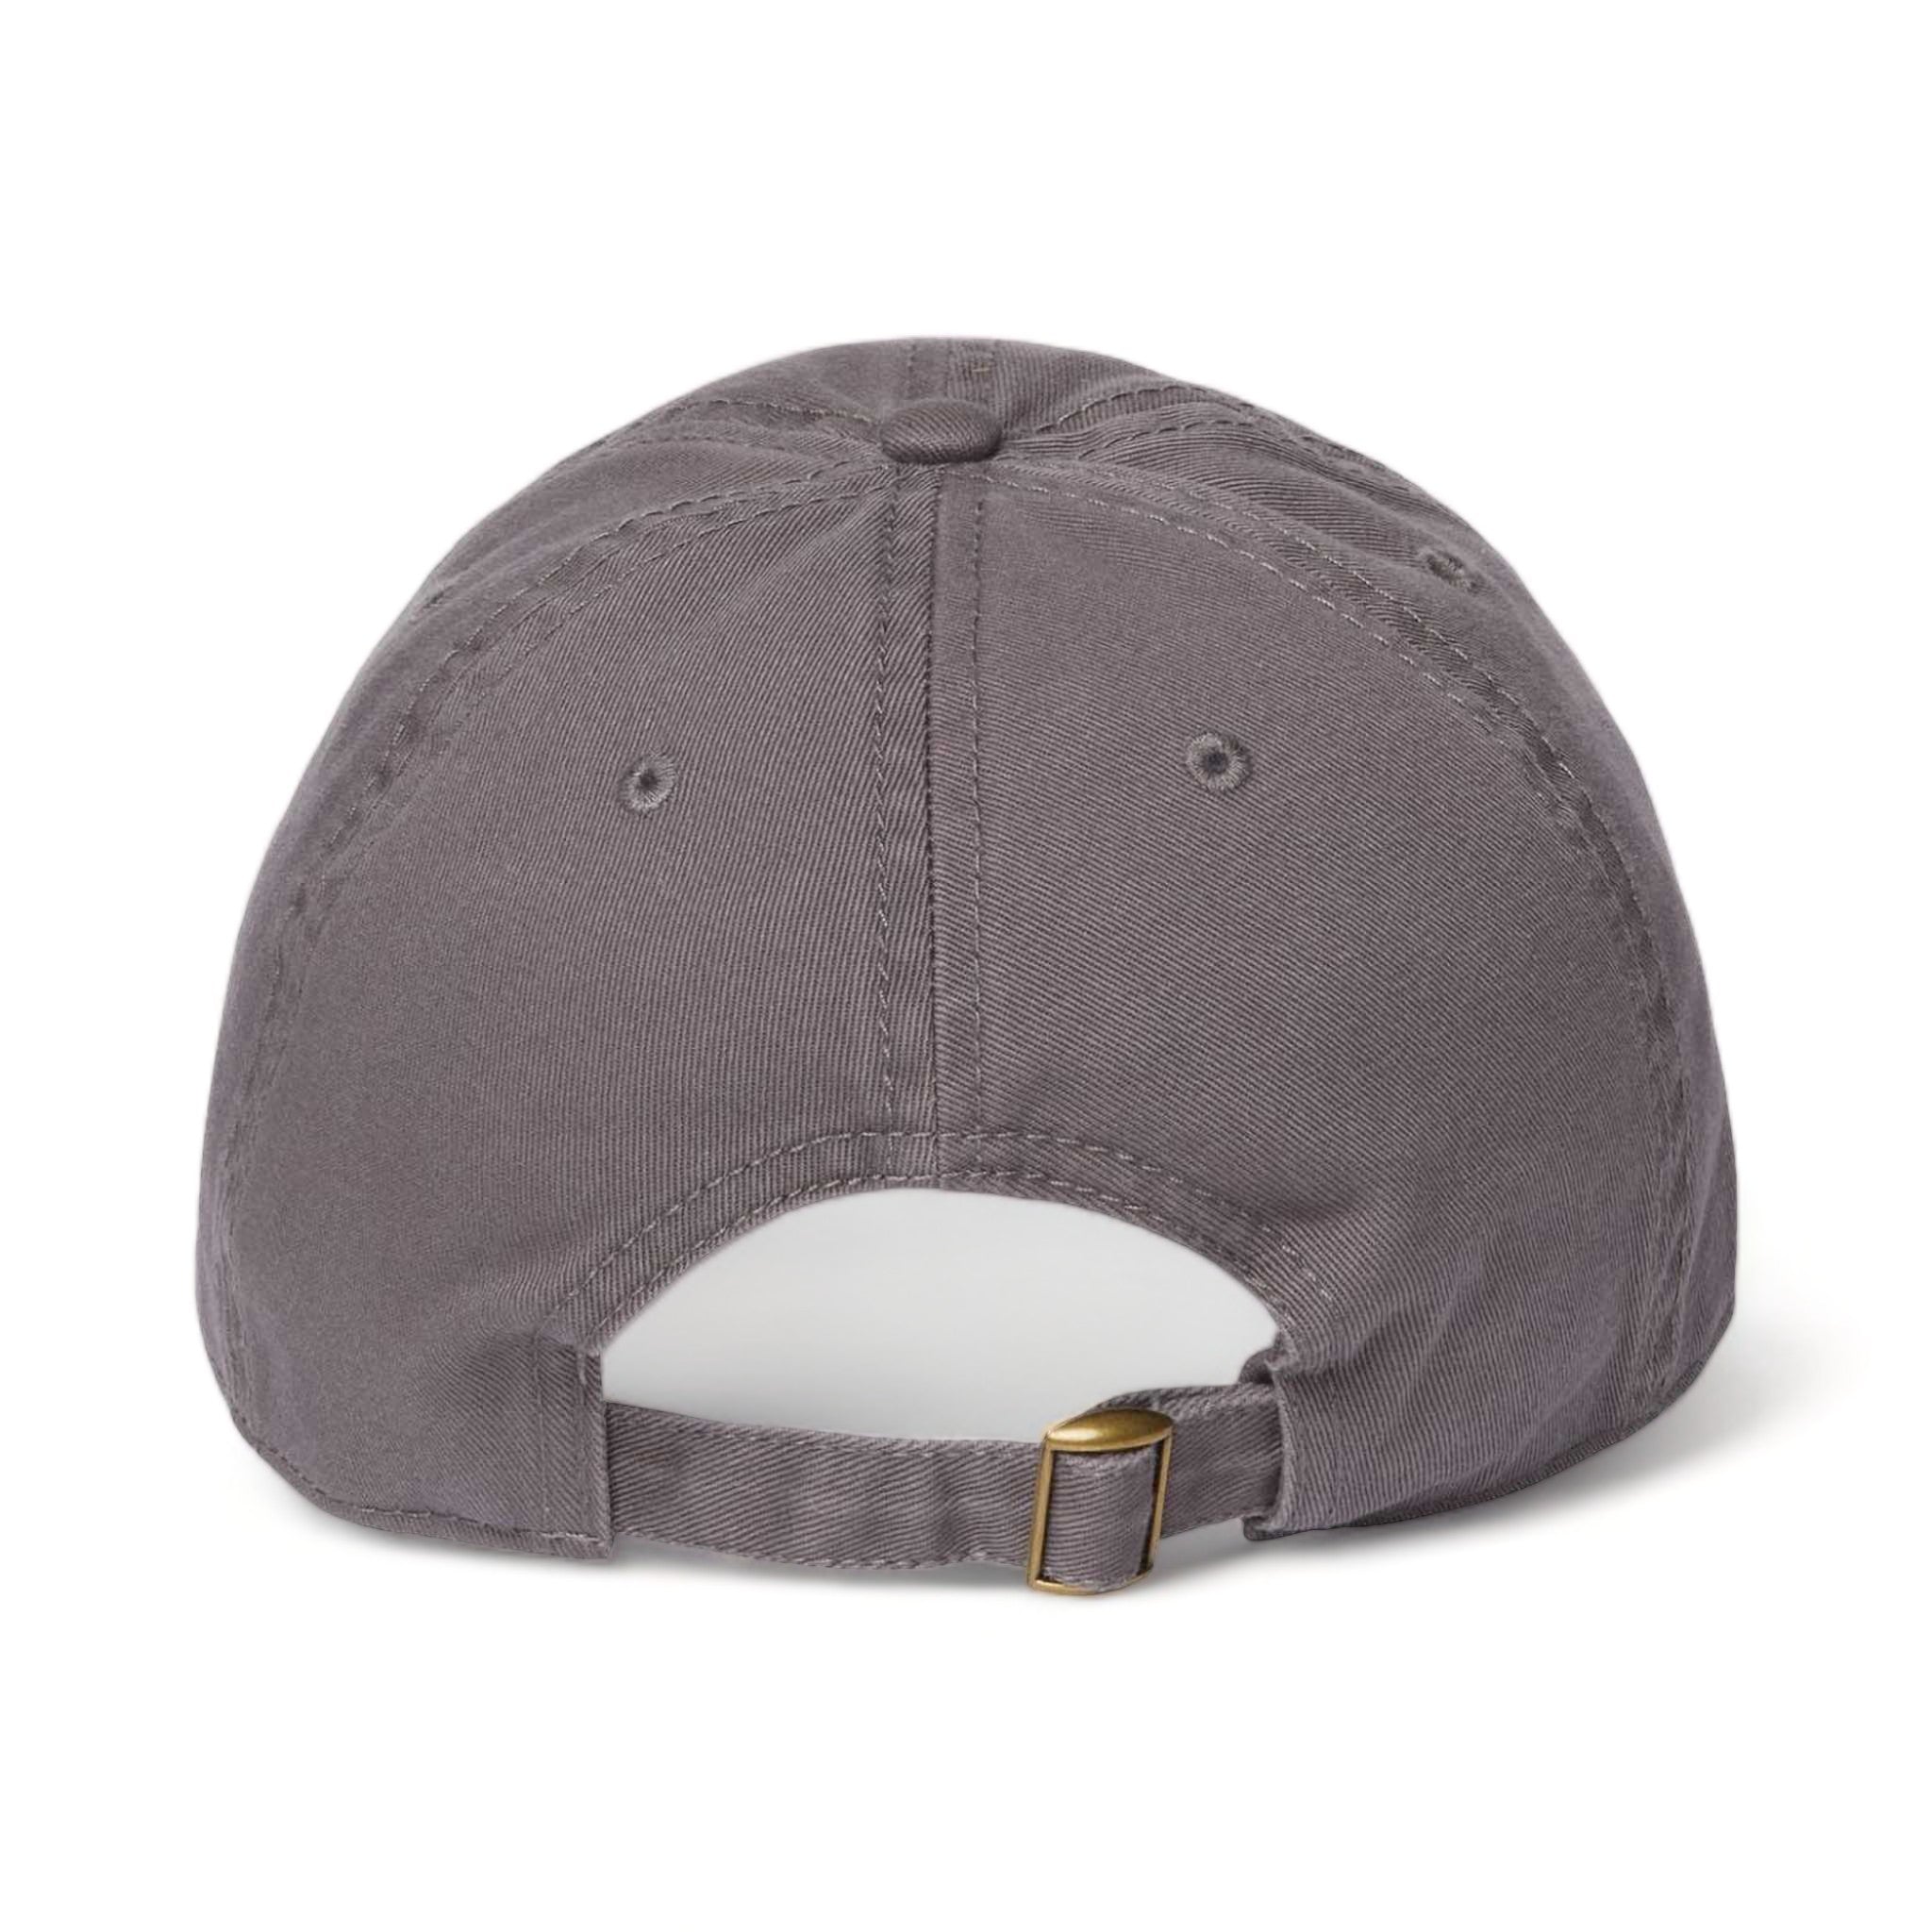 Back view of CAP AMERICA i1002 custom hat in charcoal